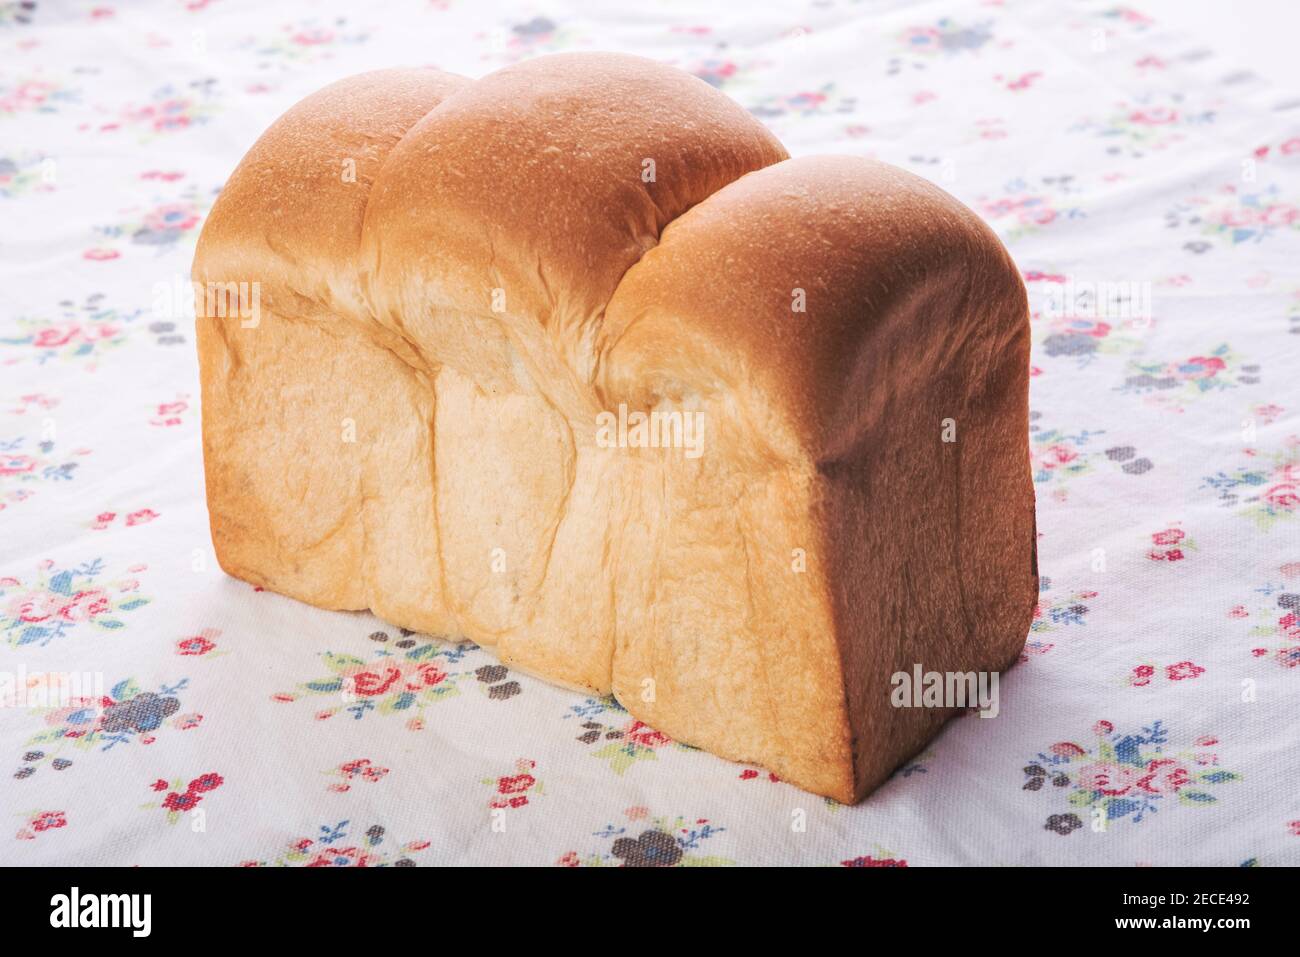 Japanese Bread homemade Stock Photo